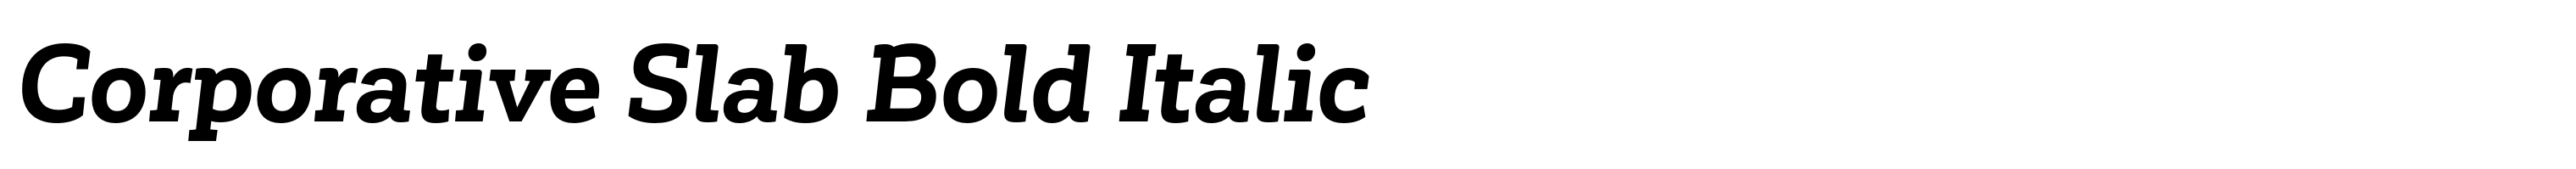 Corporative Slab Bold Italic